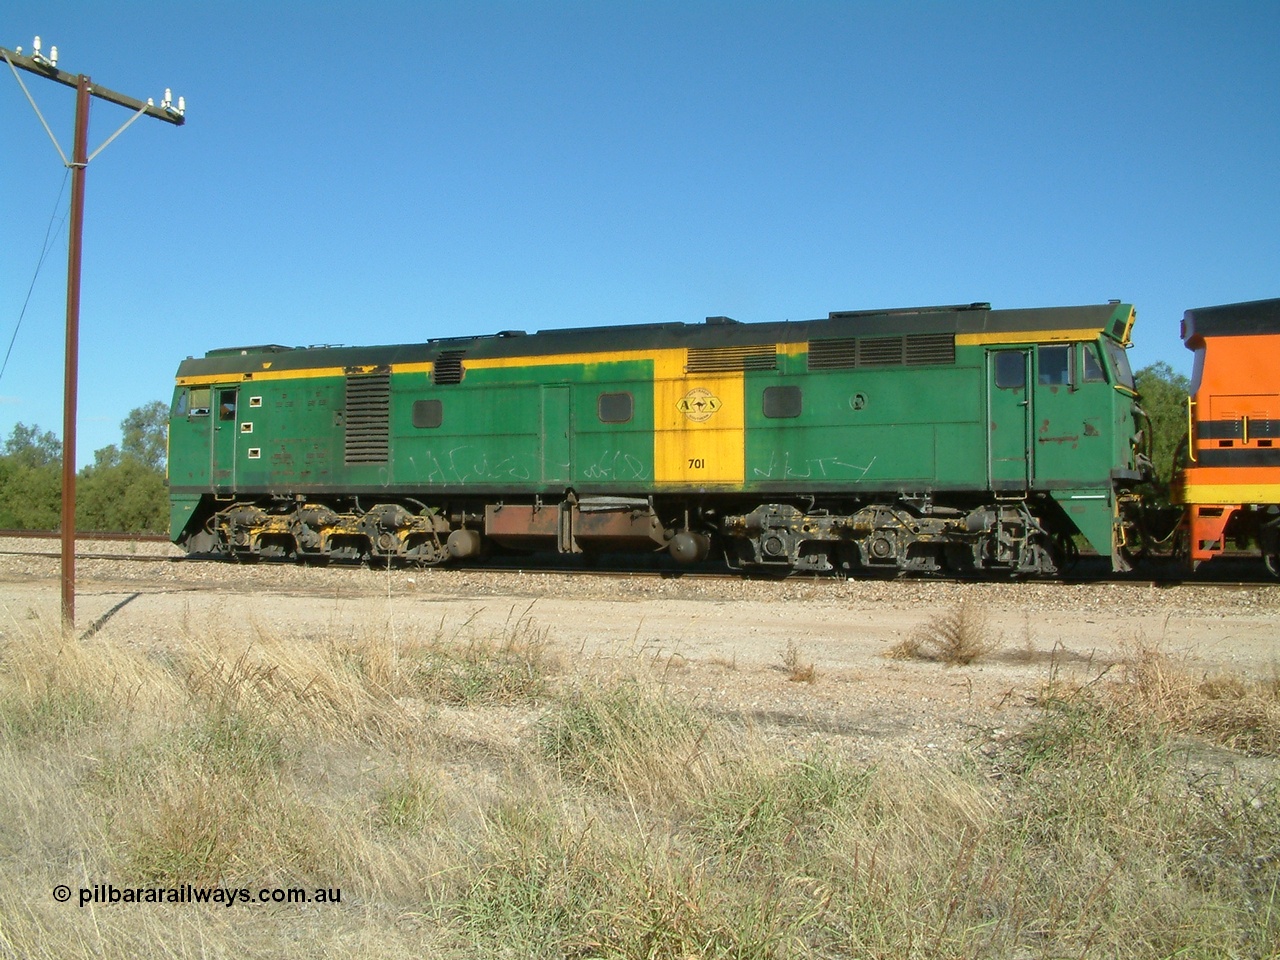 030403 154252
Gladstone, former South Australian Railways AE Goodwin built DL500G ALCo designated the 700 class, class leader 701 serial G6042-2 leads a grain train being loaded on the 3rd April 2003.
Keywords: 700-class;701;G6042-2;AE-Goodwin;ALCo;DL500G;